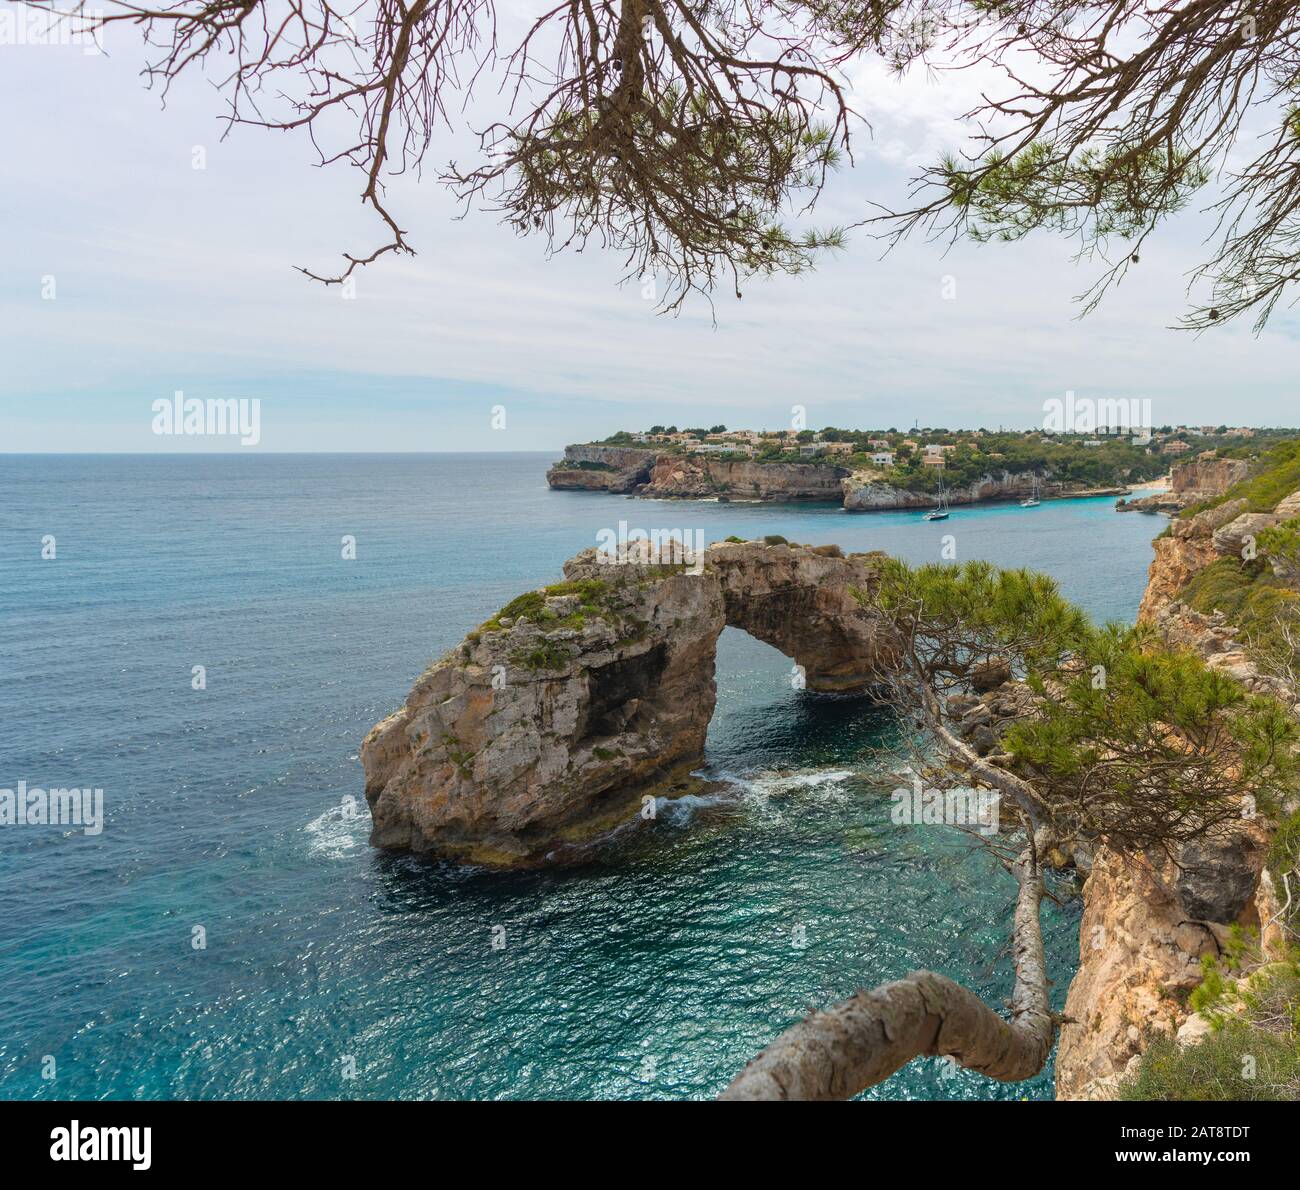 Est pontas, arc de pierre naturelle sur la côte de santanyi Majorque. Es pontas, arco de piedra naturel en la costa de santanyi majorque Banque D'Images